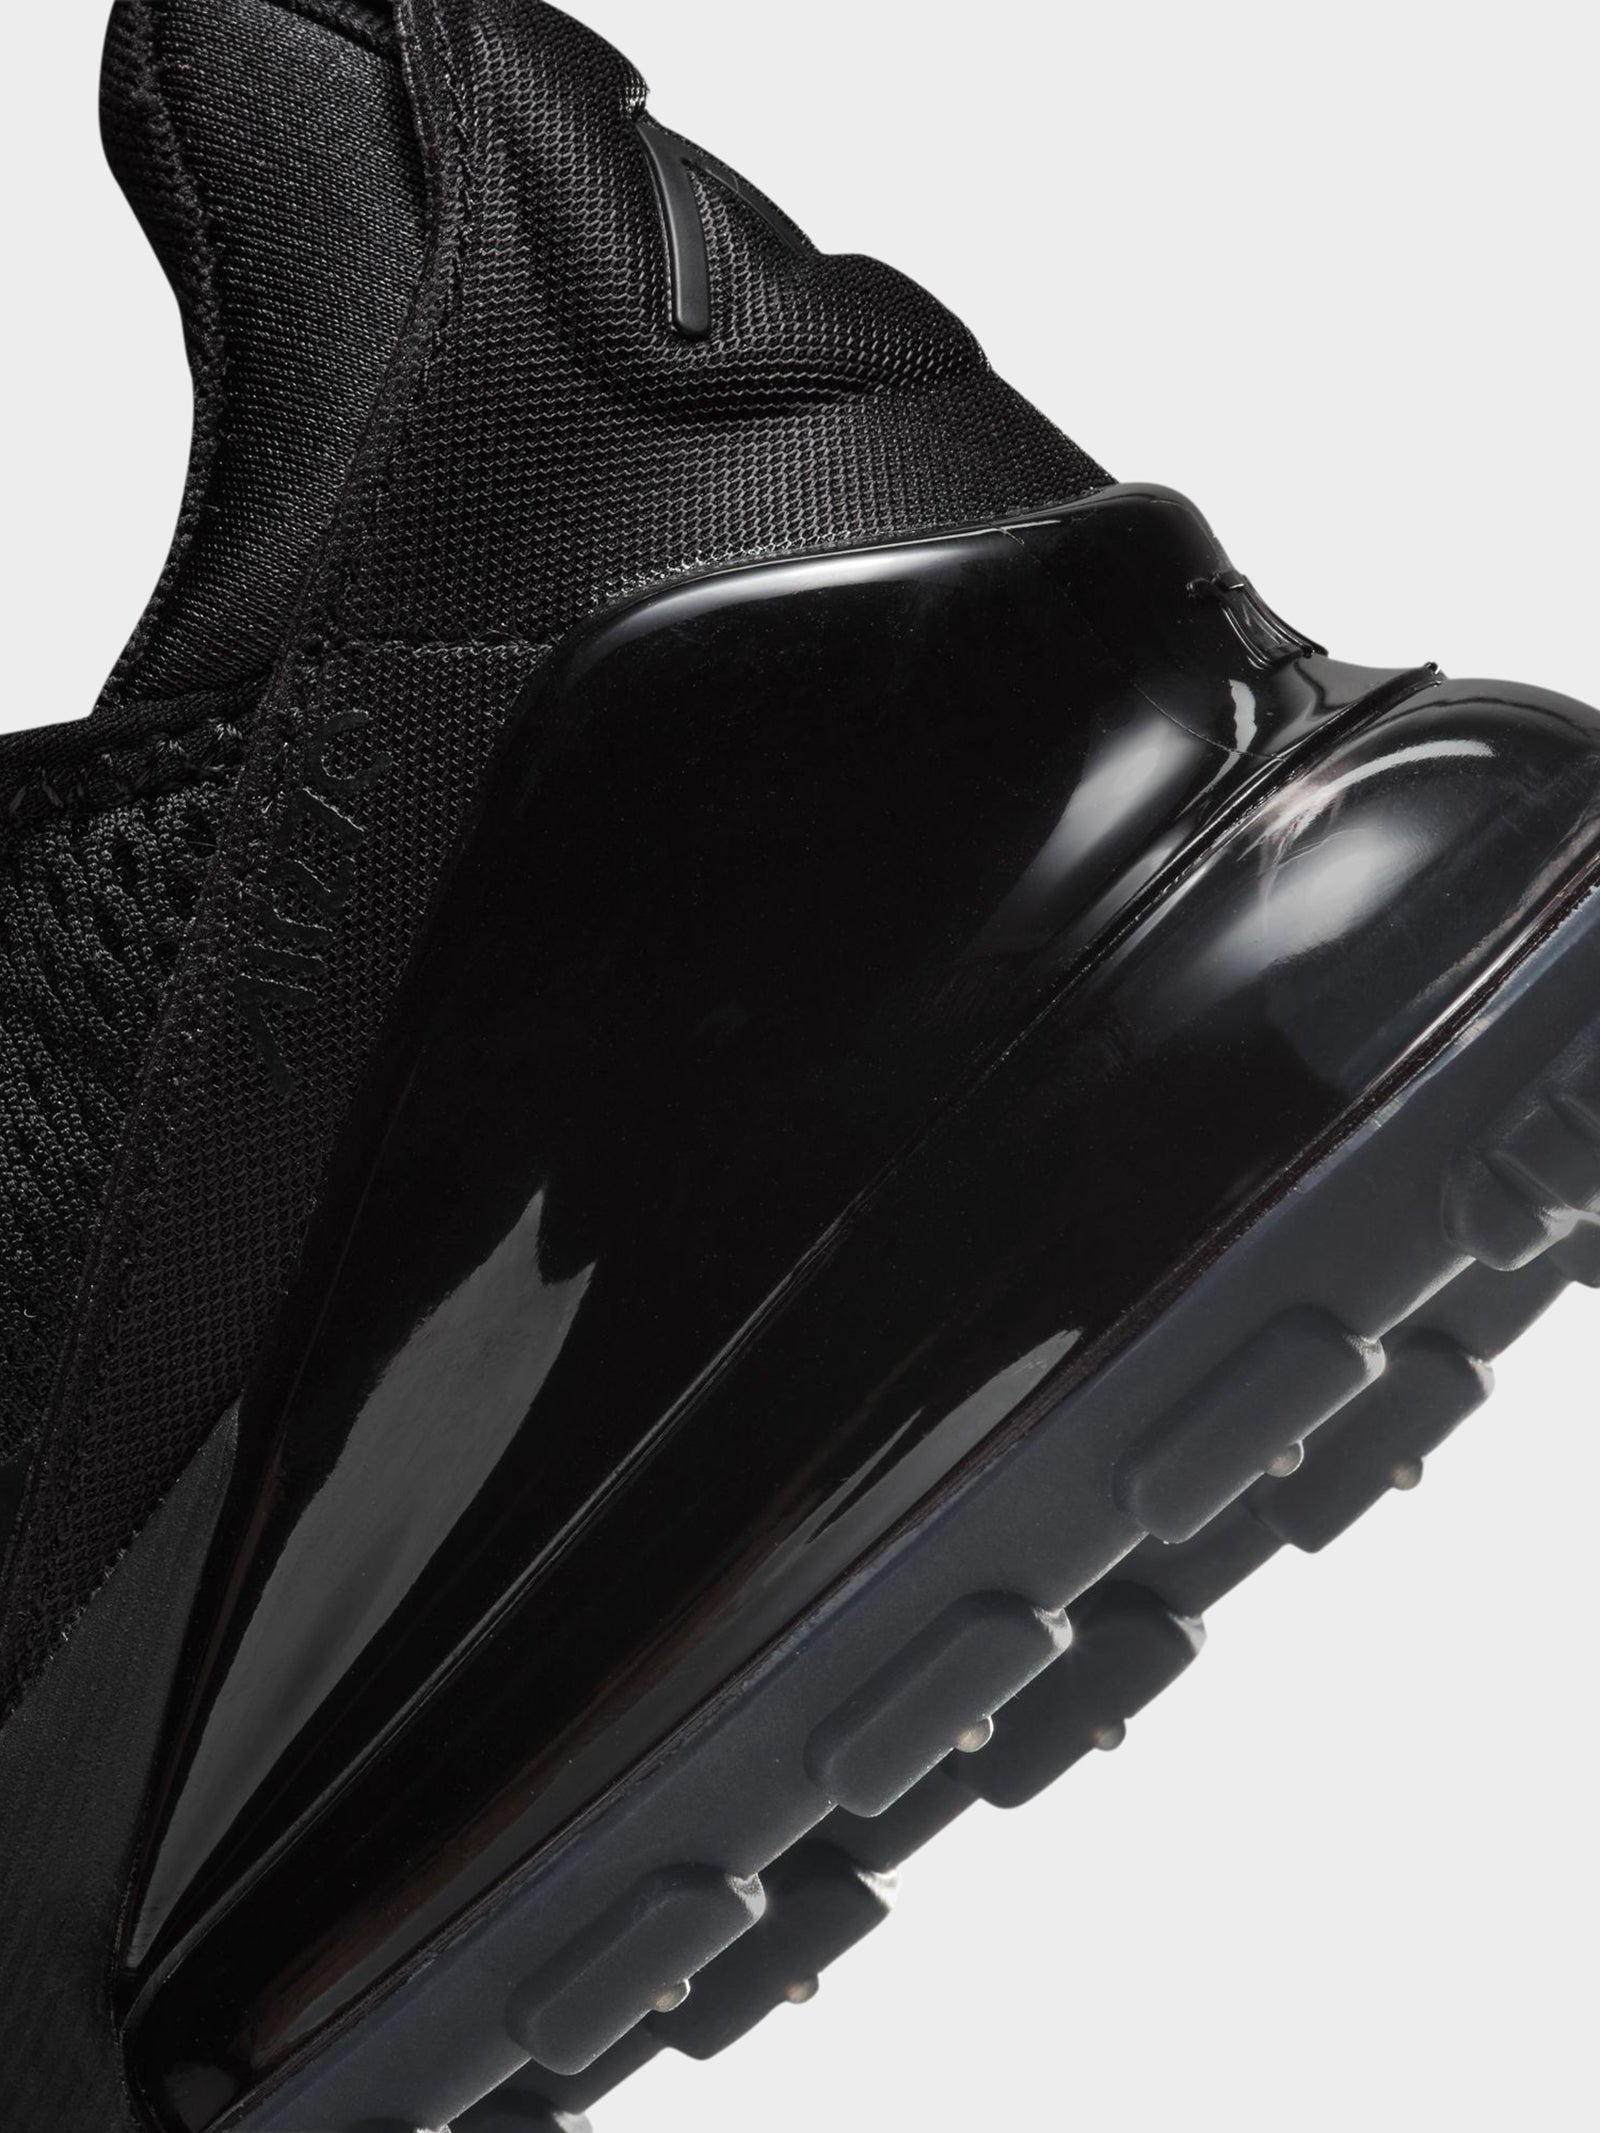 Womens Nike Air Max 270 Sneakers in Black/Black